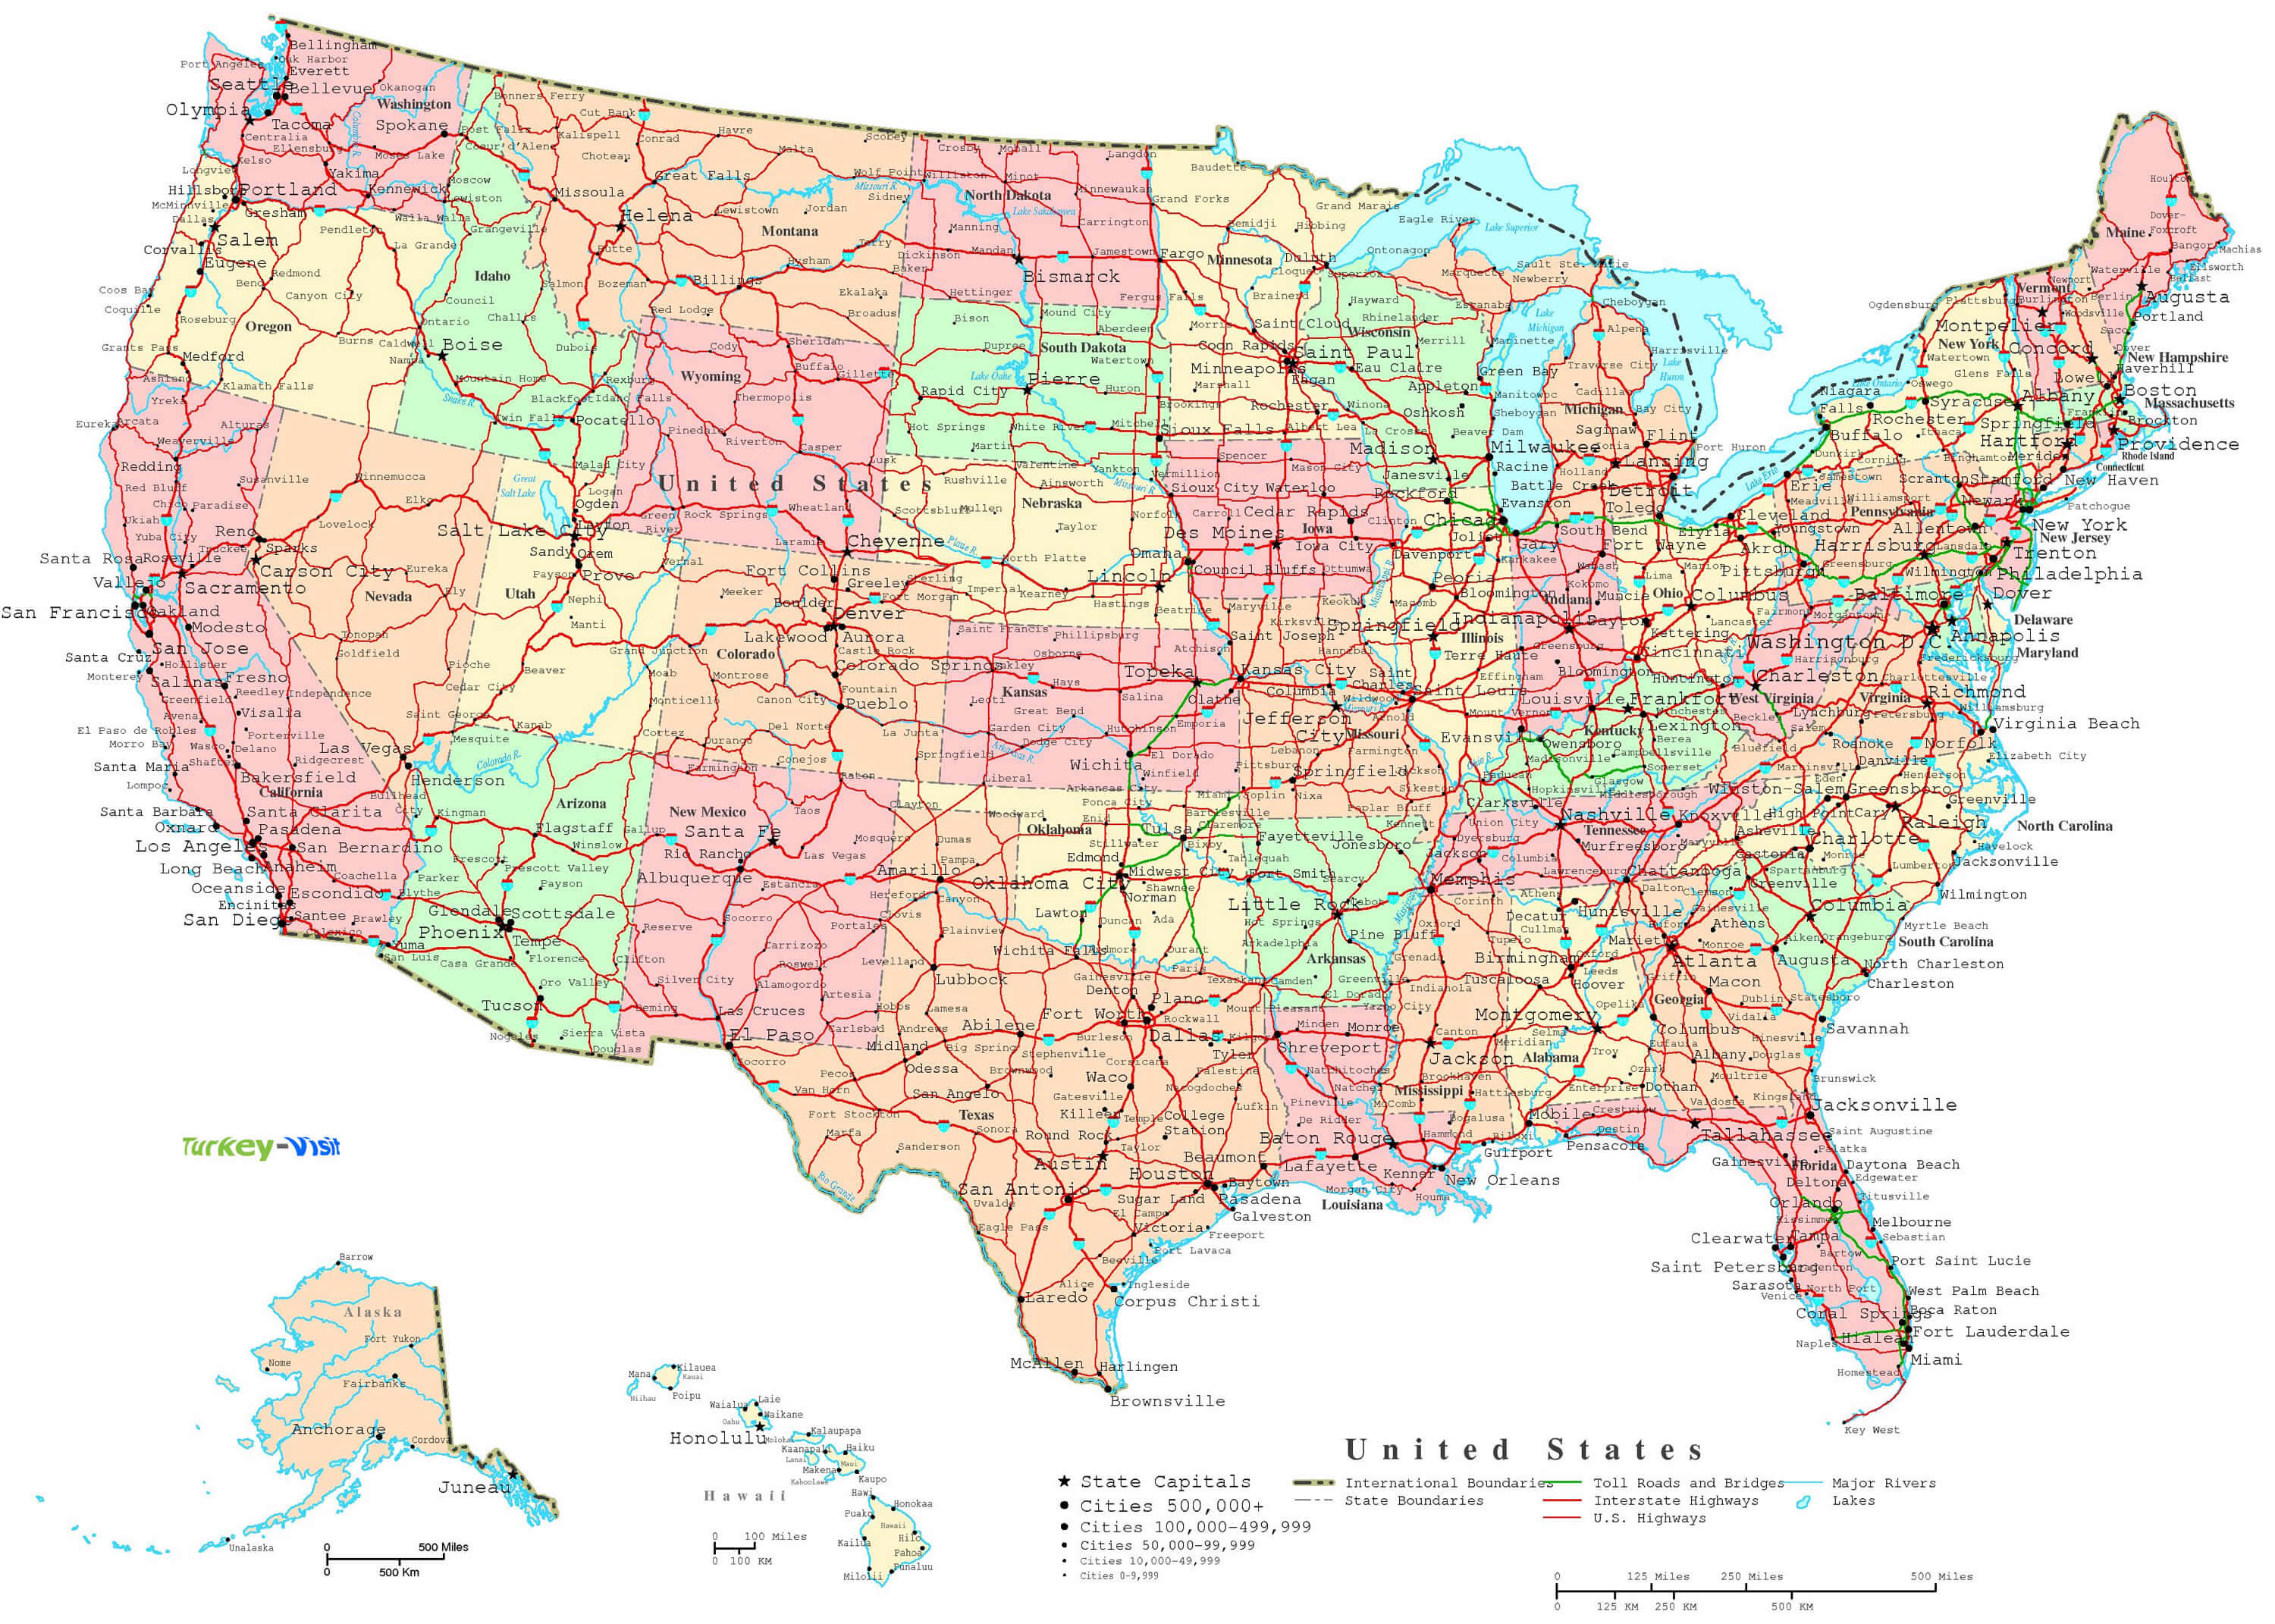 Vereinigte Staaten stadte karte b